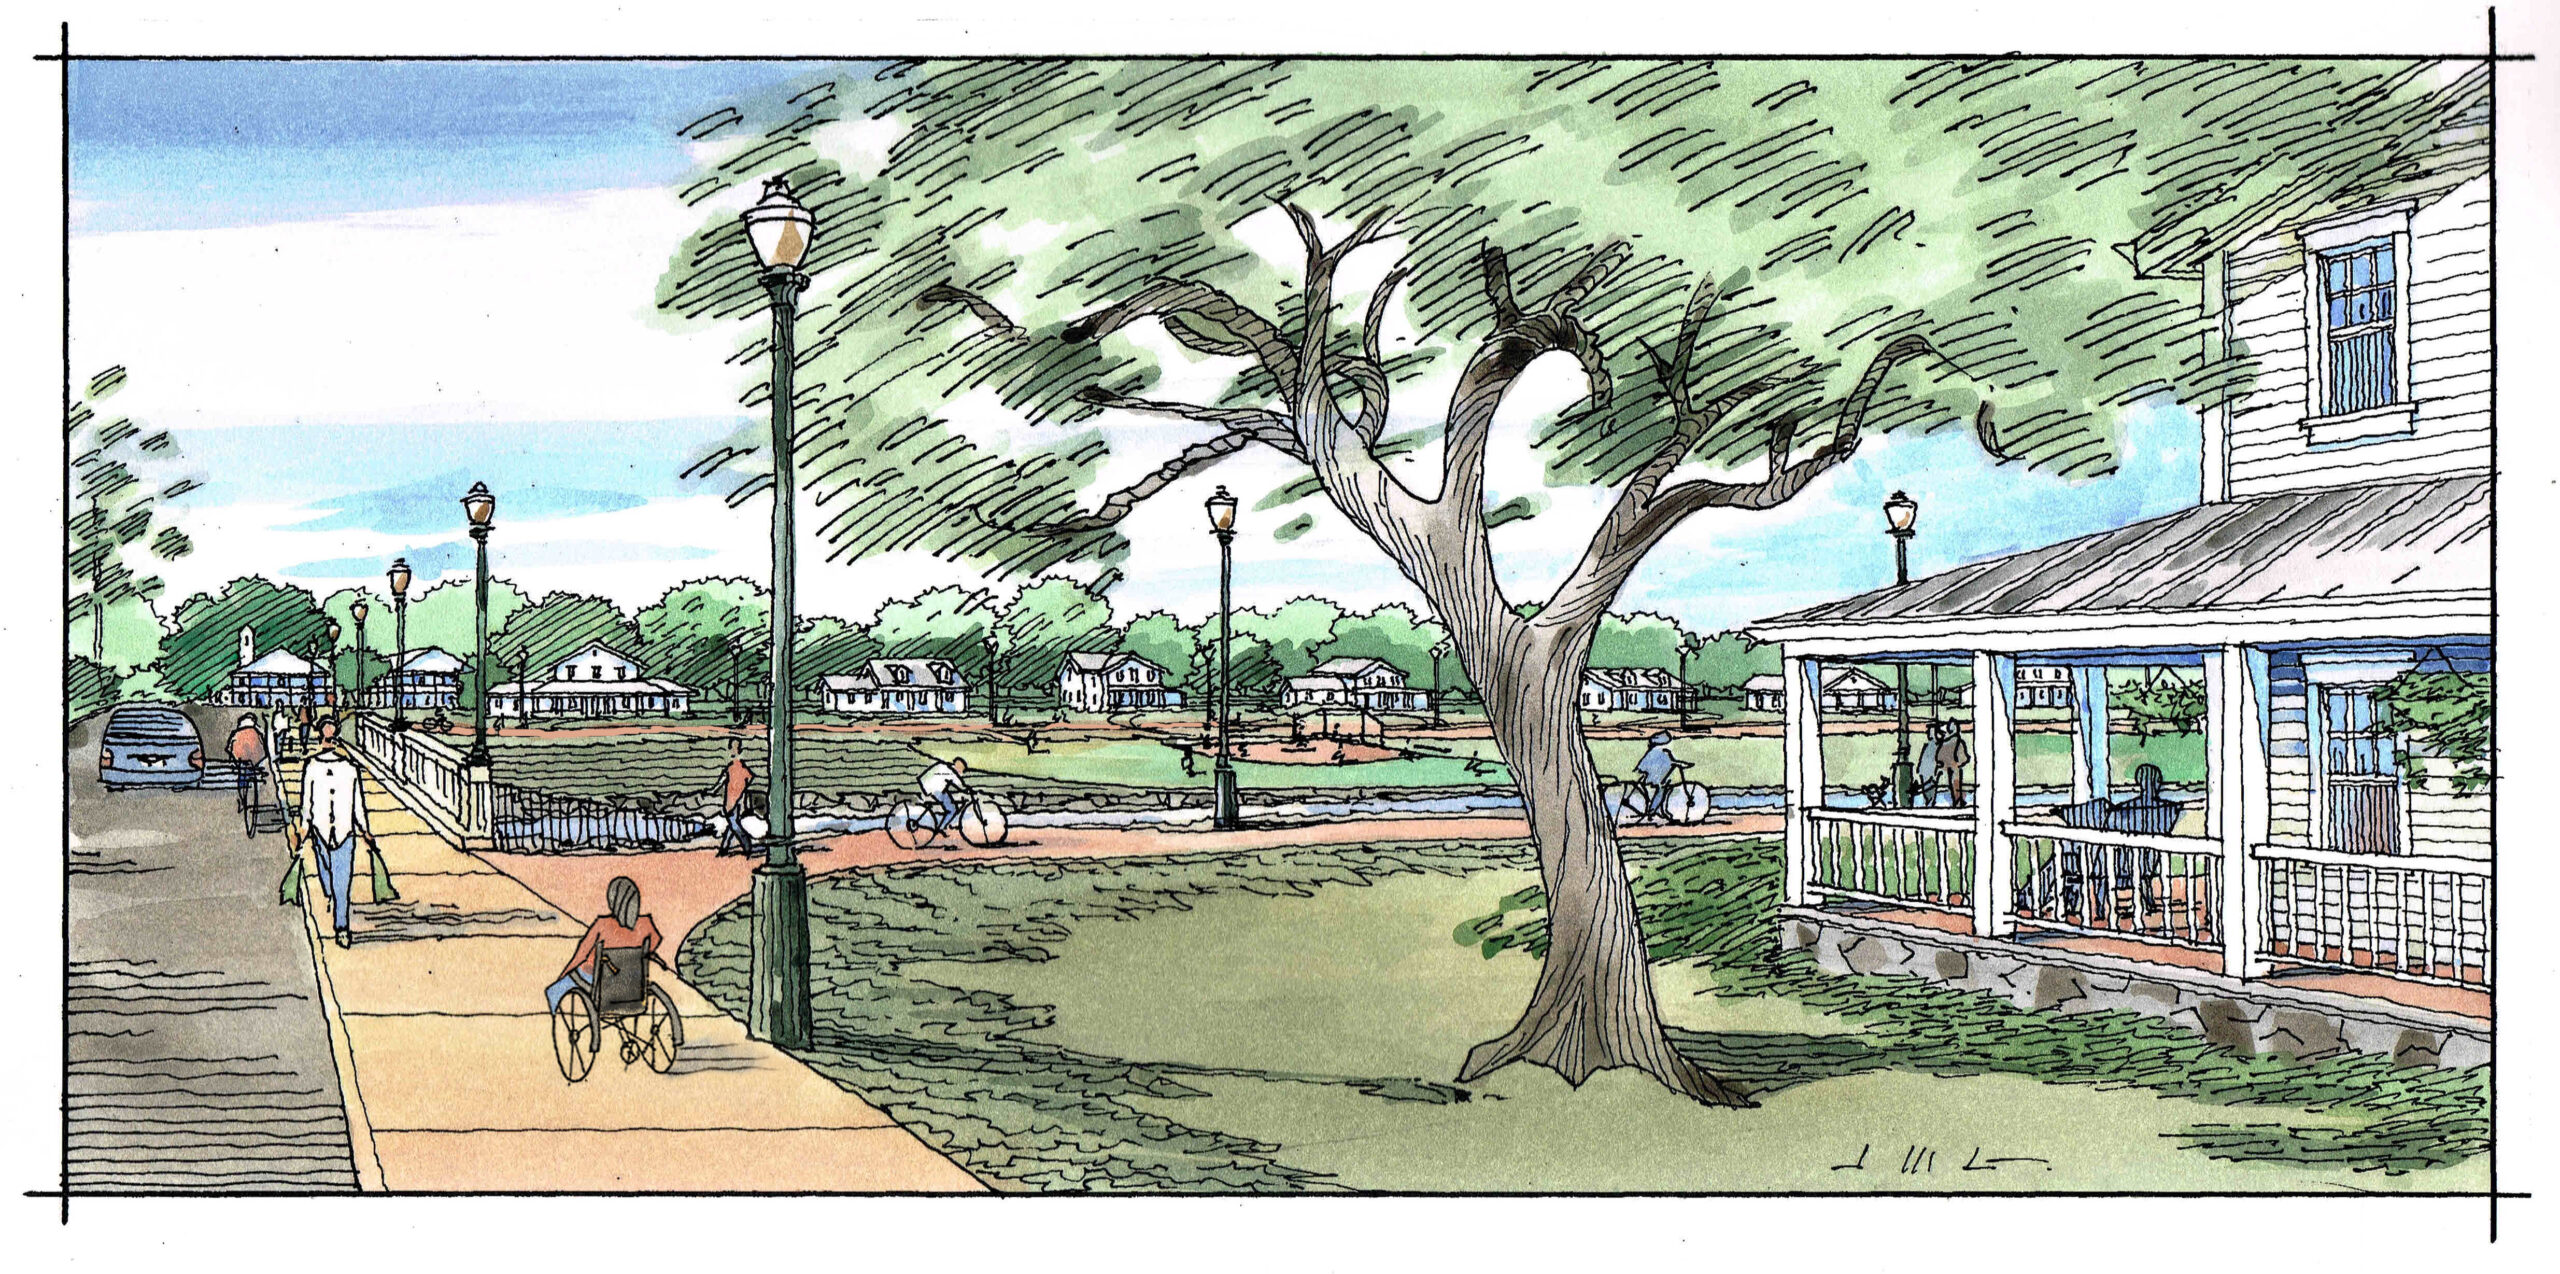 VMWP Urban Design Master plan CLSH Pineville<br /><small></small>